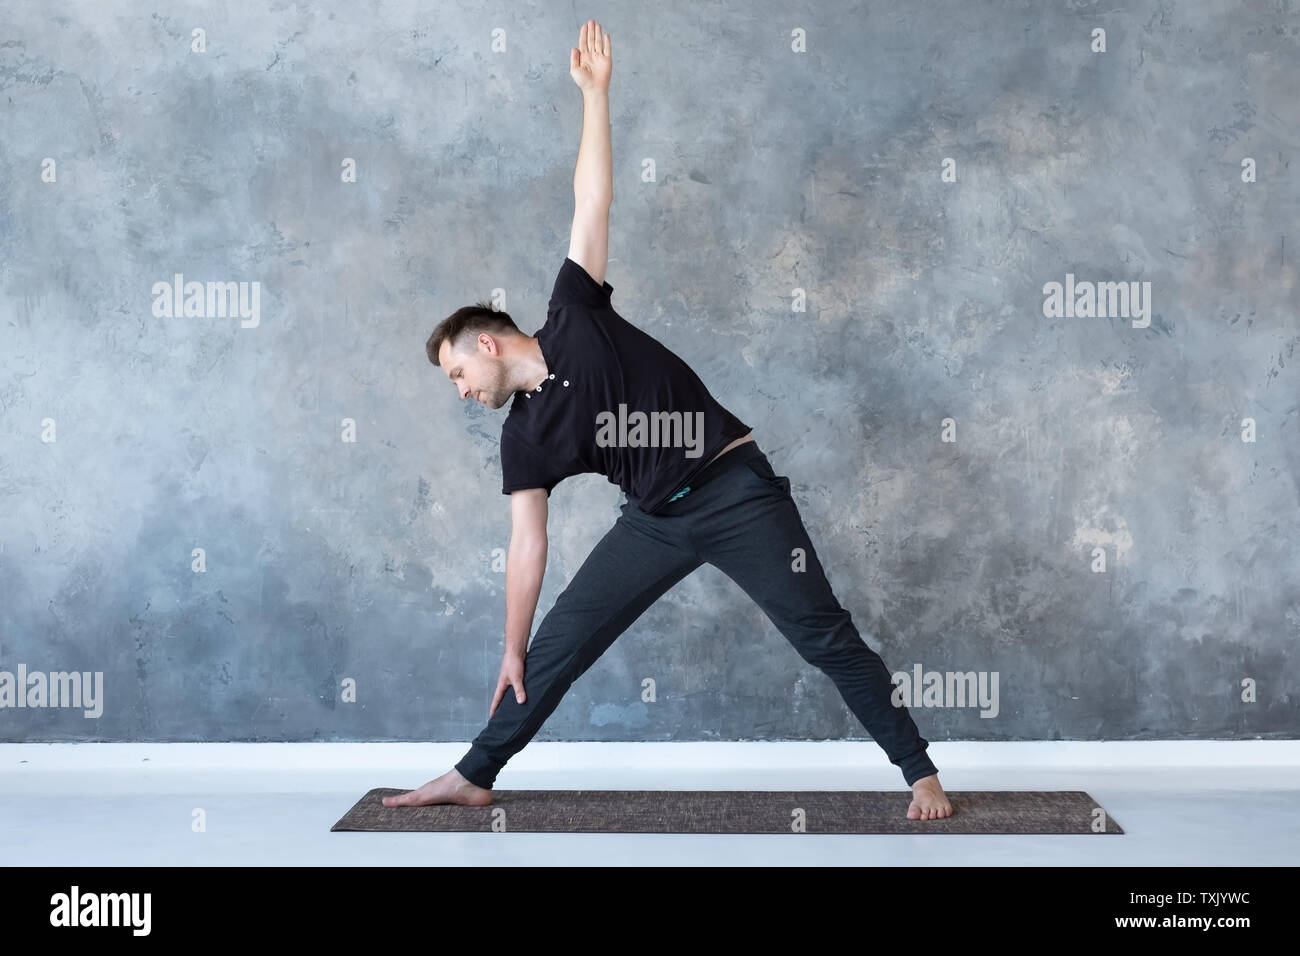 Man beginner practicing yoga doing trikonasana pose. Stock Photo